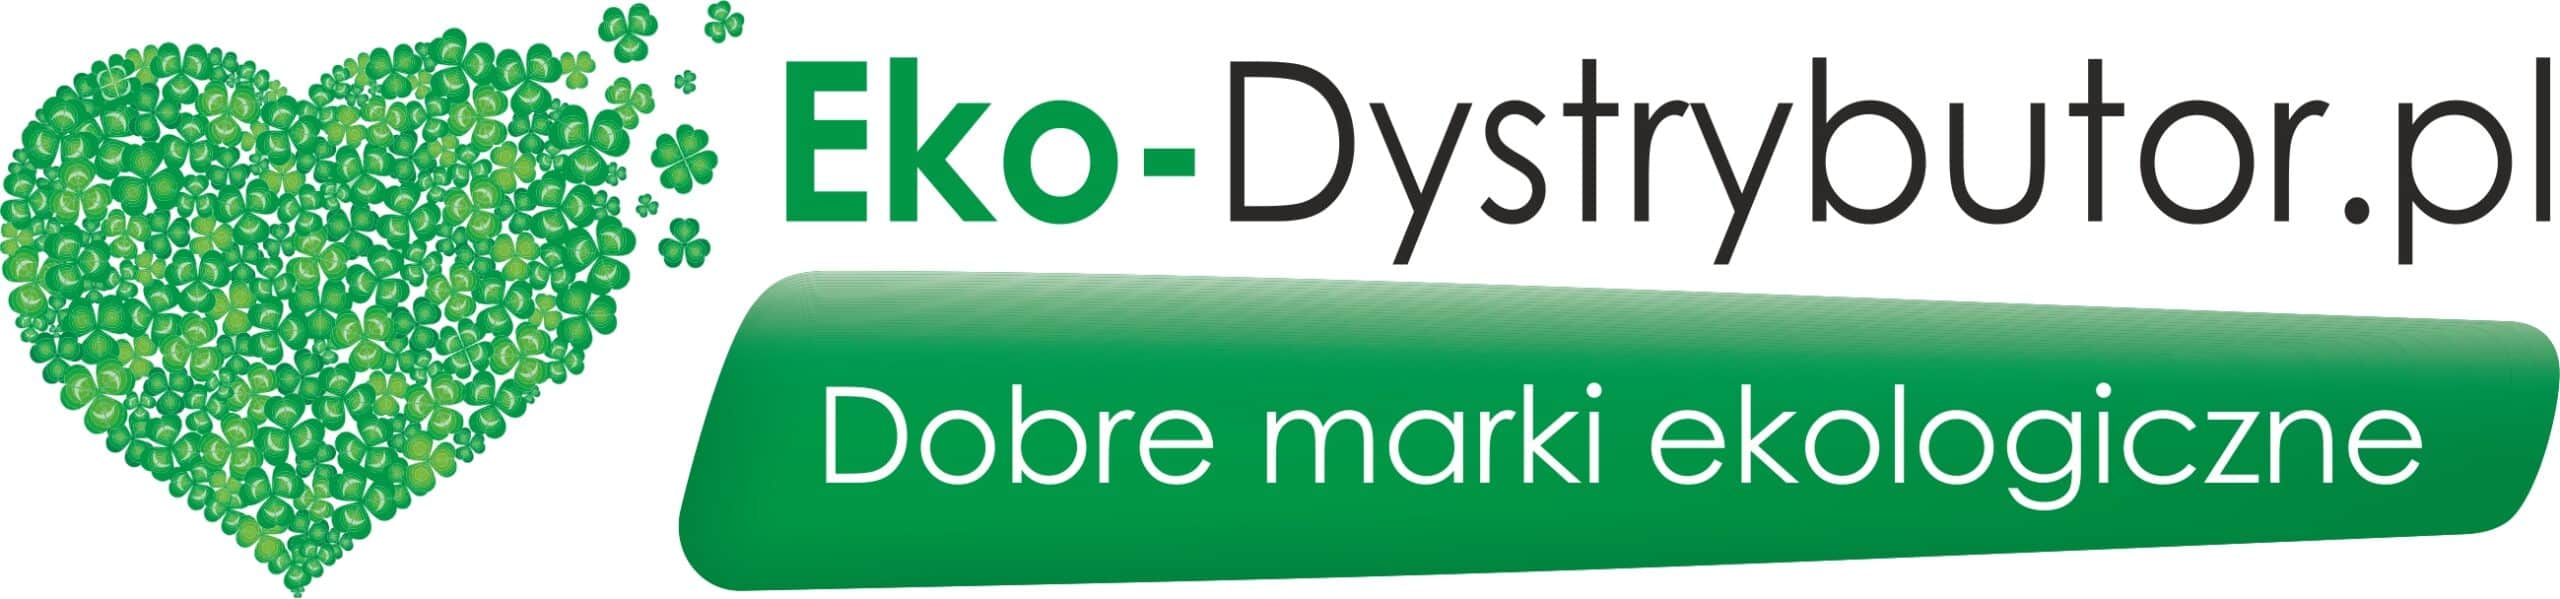 eko-dystrybutor-logo-duze